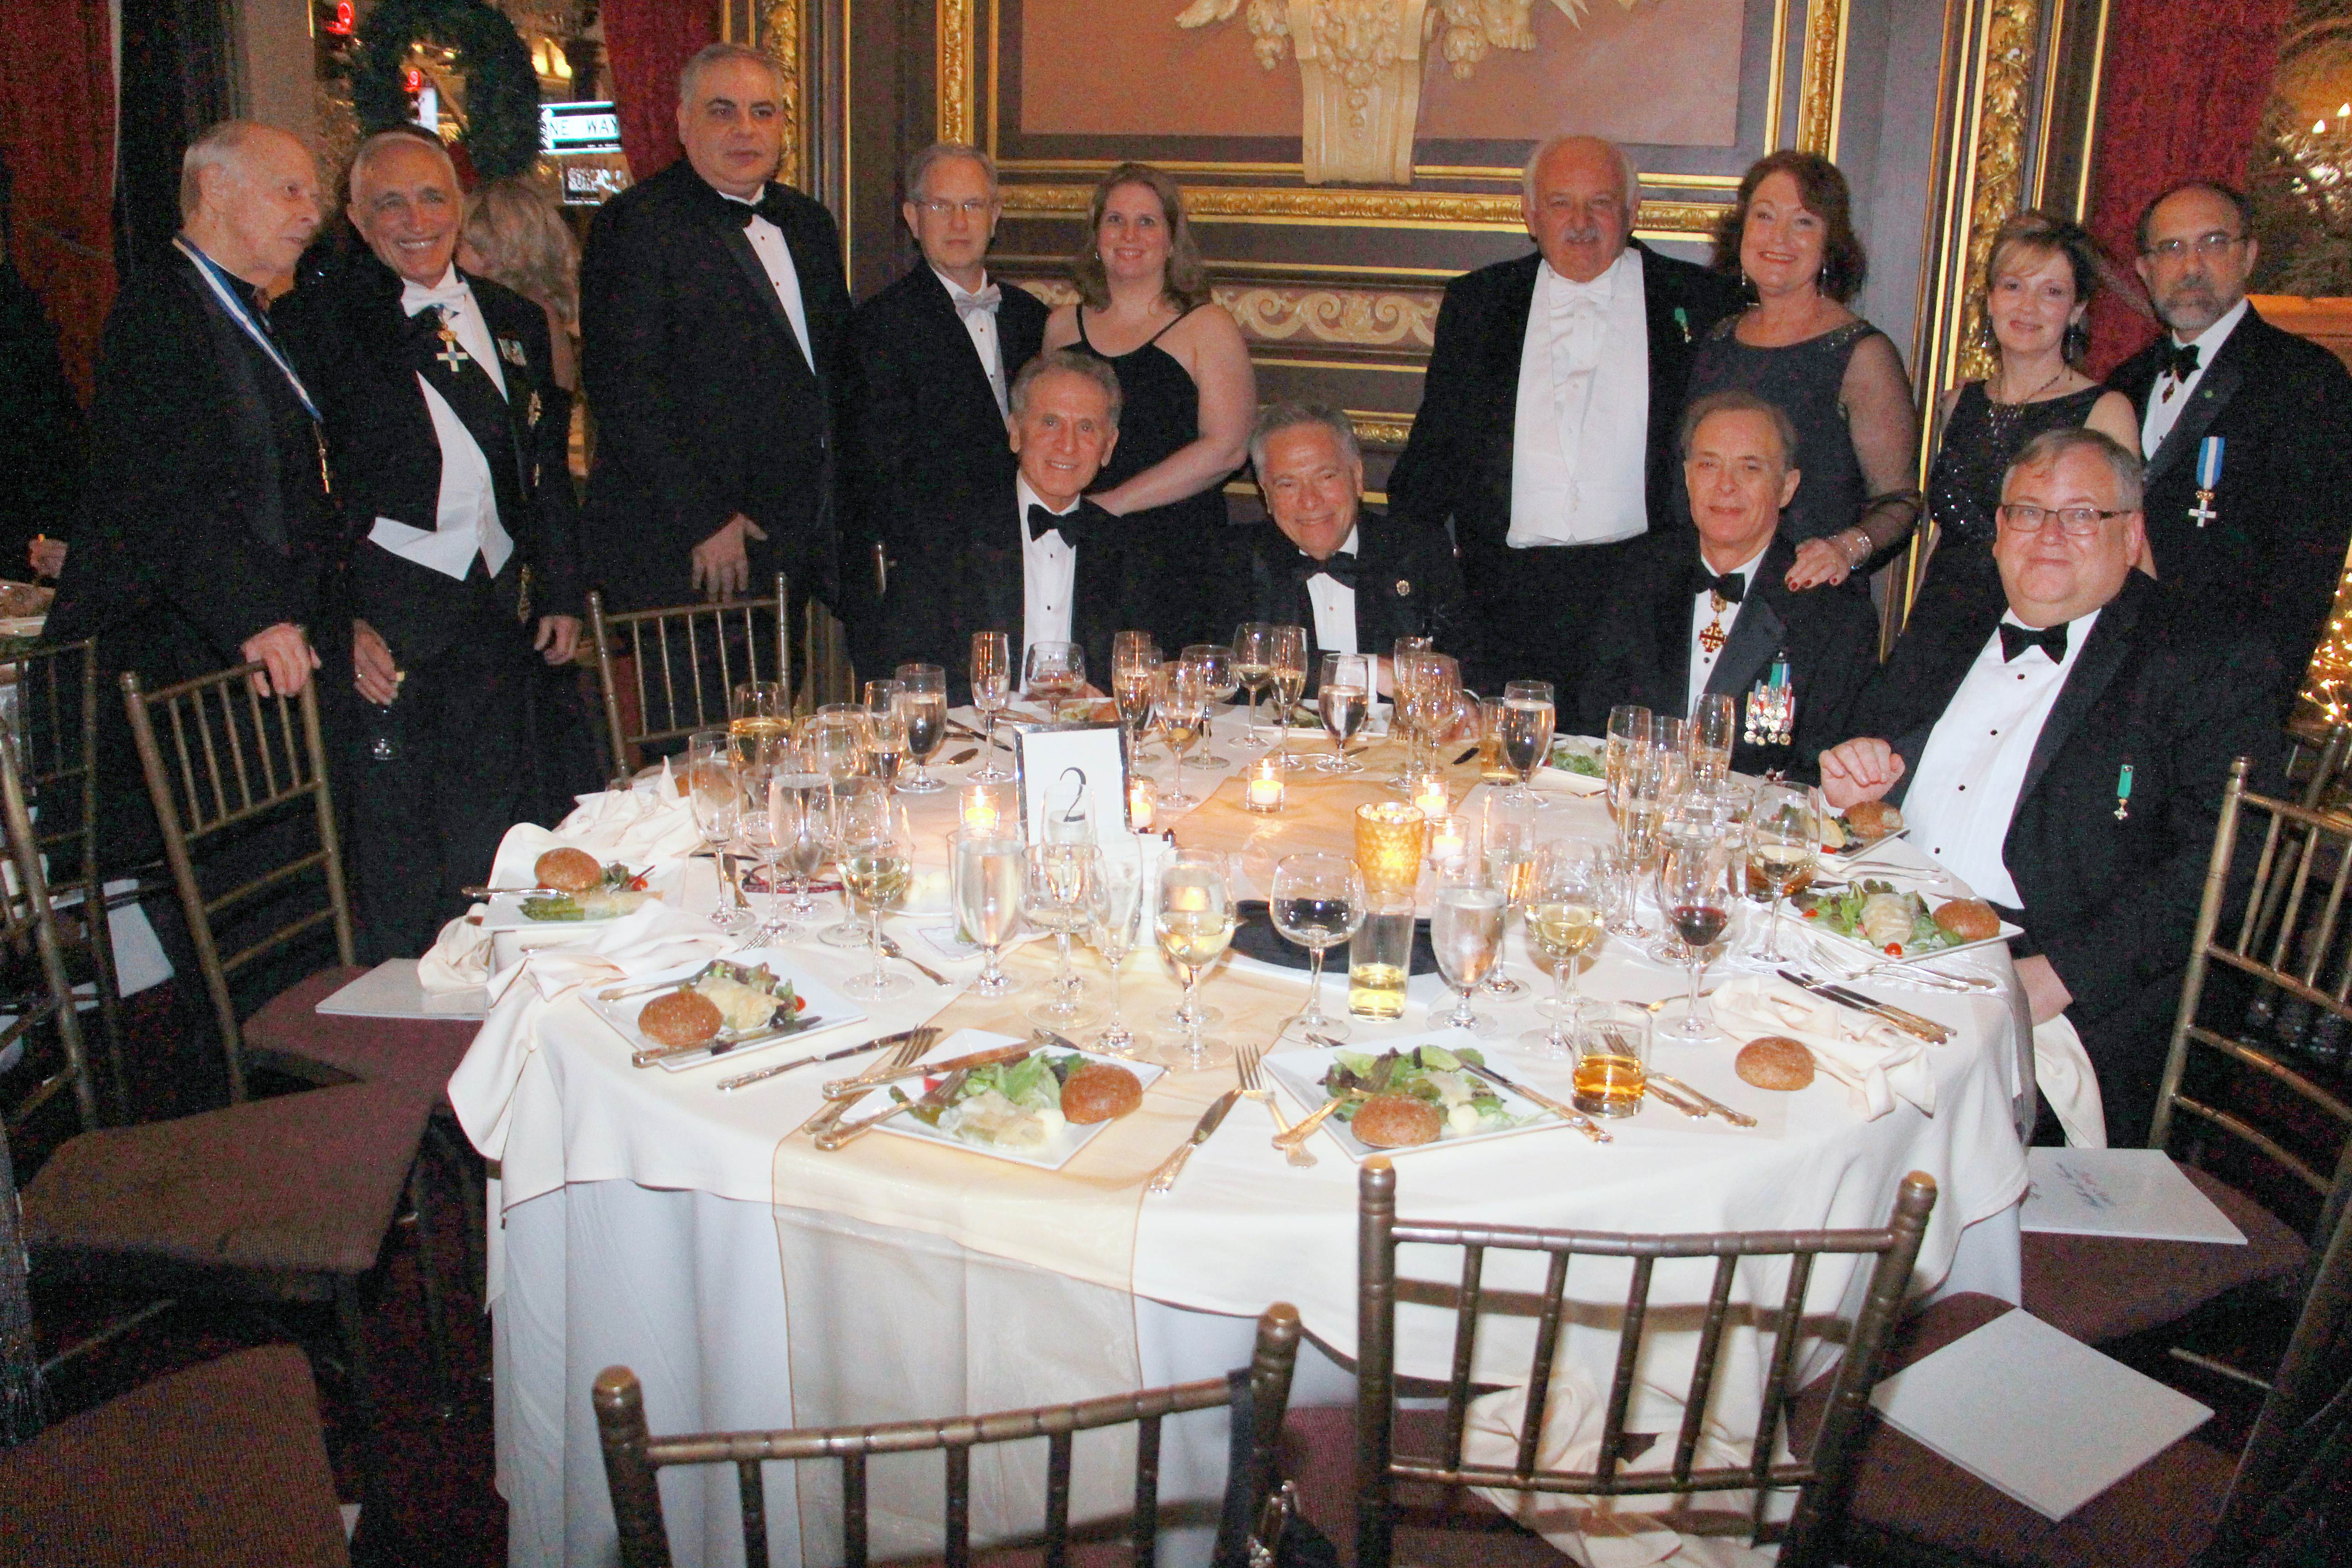 Savoy Ball Table of Roy De Barbieri, Esq. and Gerald E. Farrell, Jr.,Esq.,Regional Representatives of the American Delegation of Savoy Orders in Connecticut